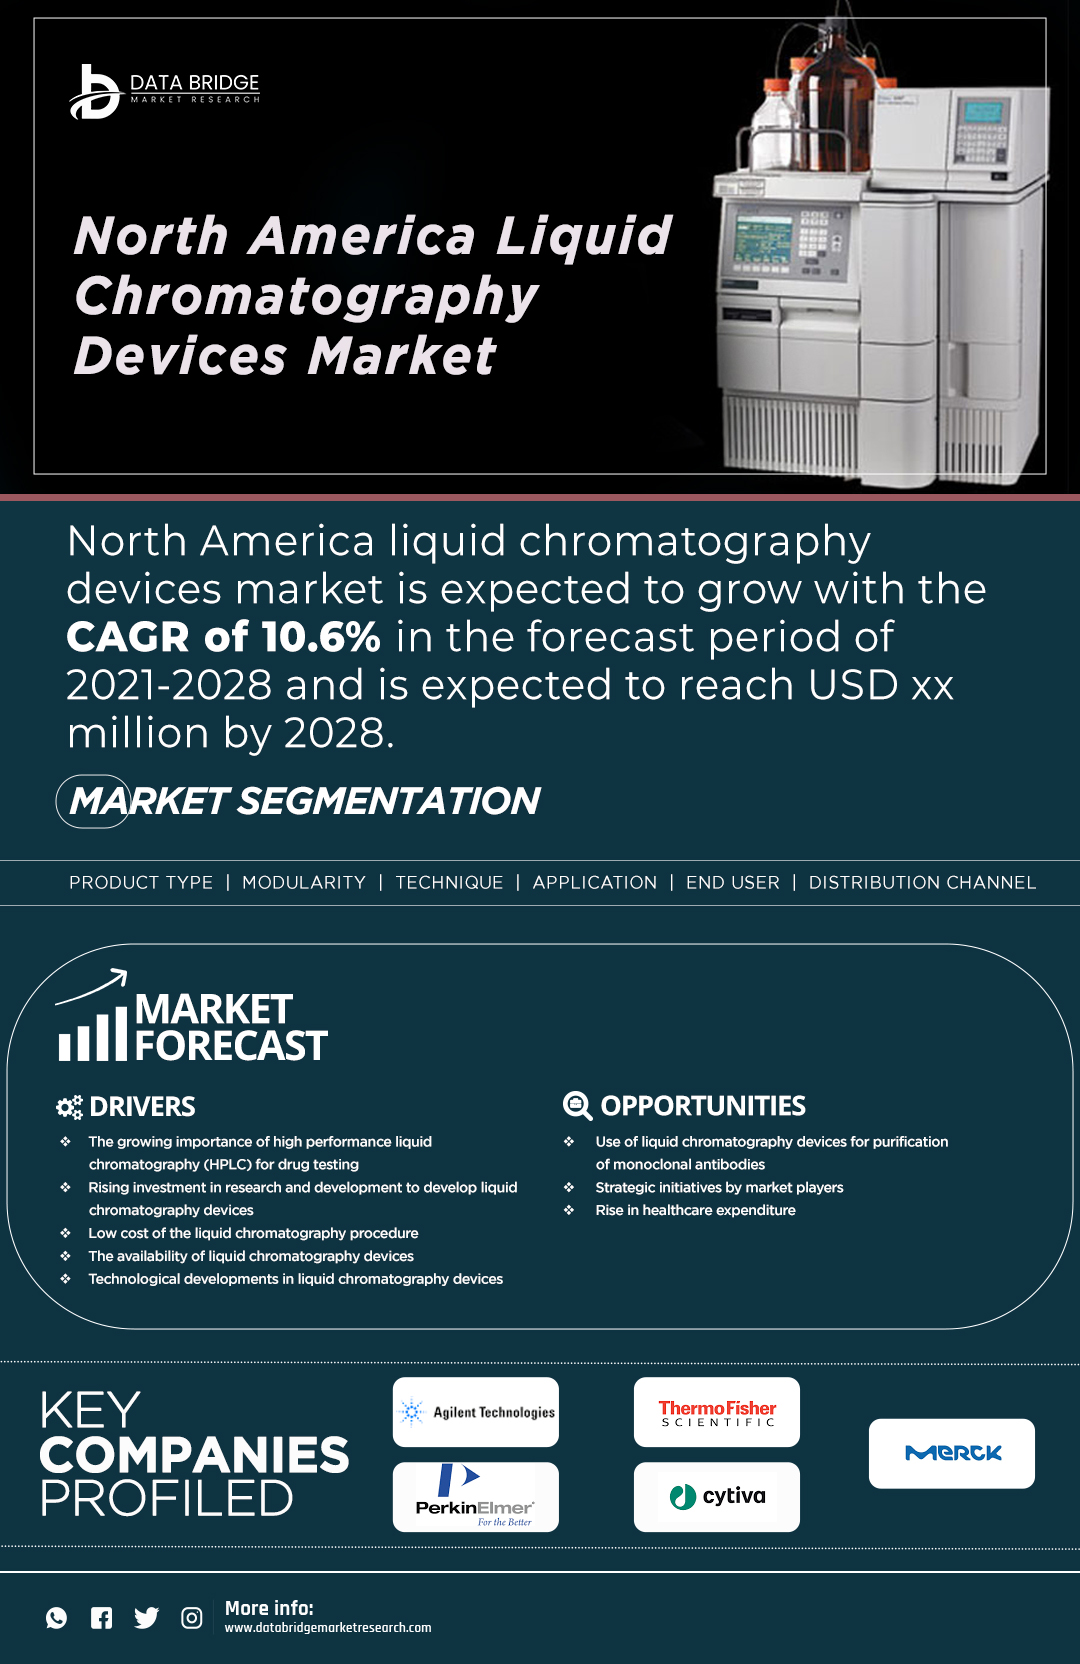 North America Liquid Chromatography Devices Market